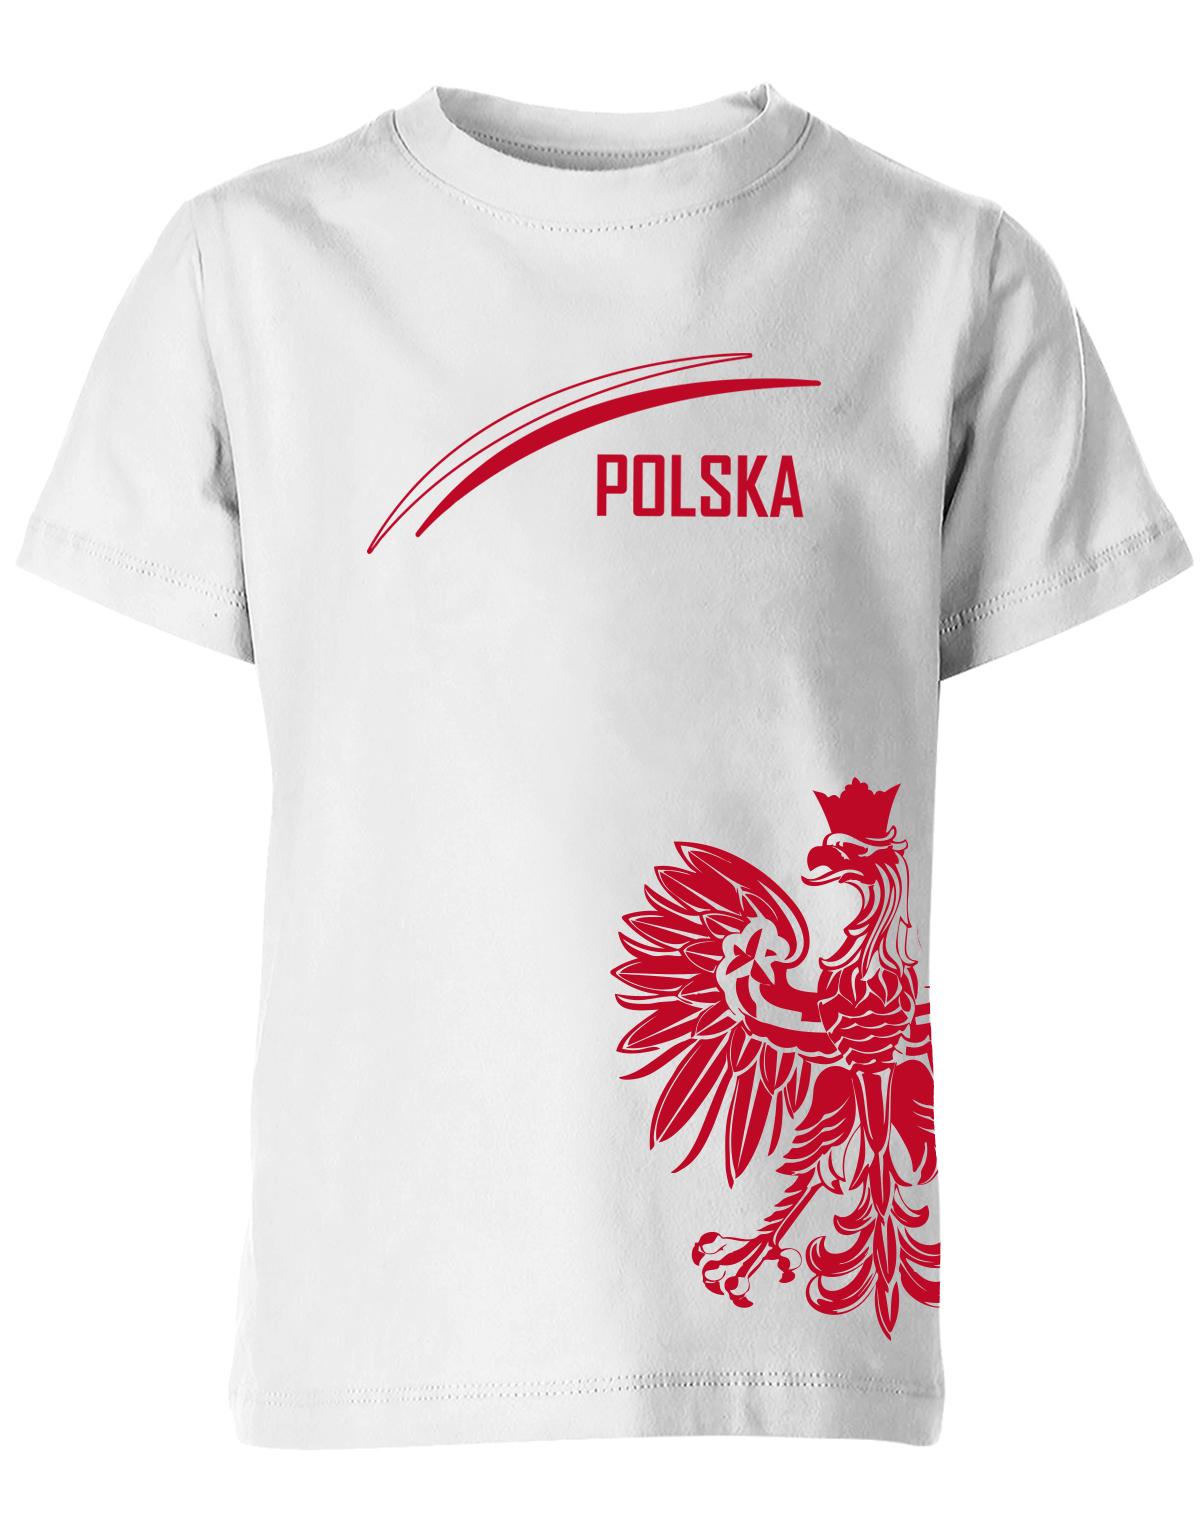 Polska Adler - Polen EM WM - Fan - Kinder T-Shirt